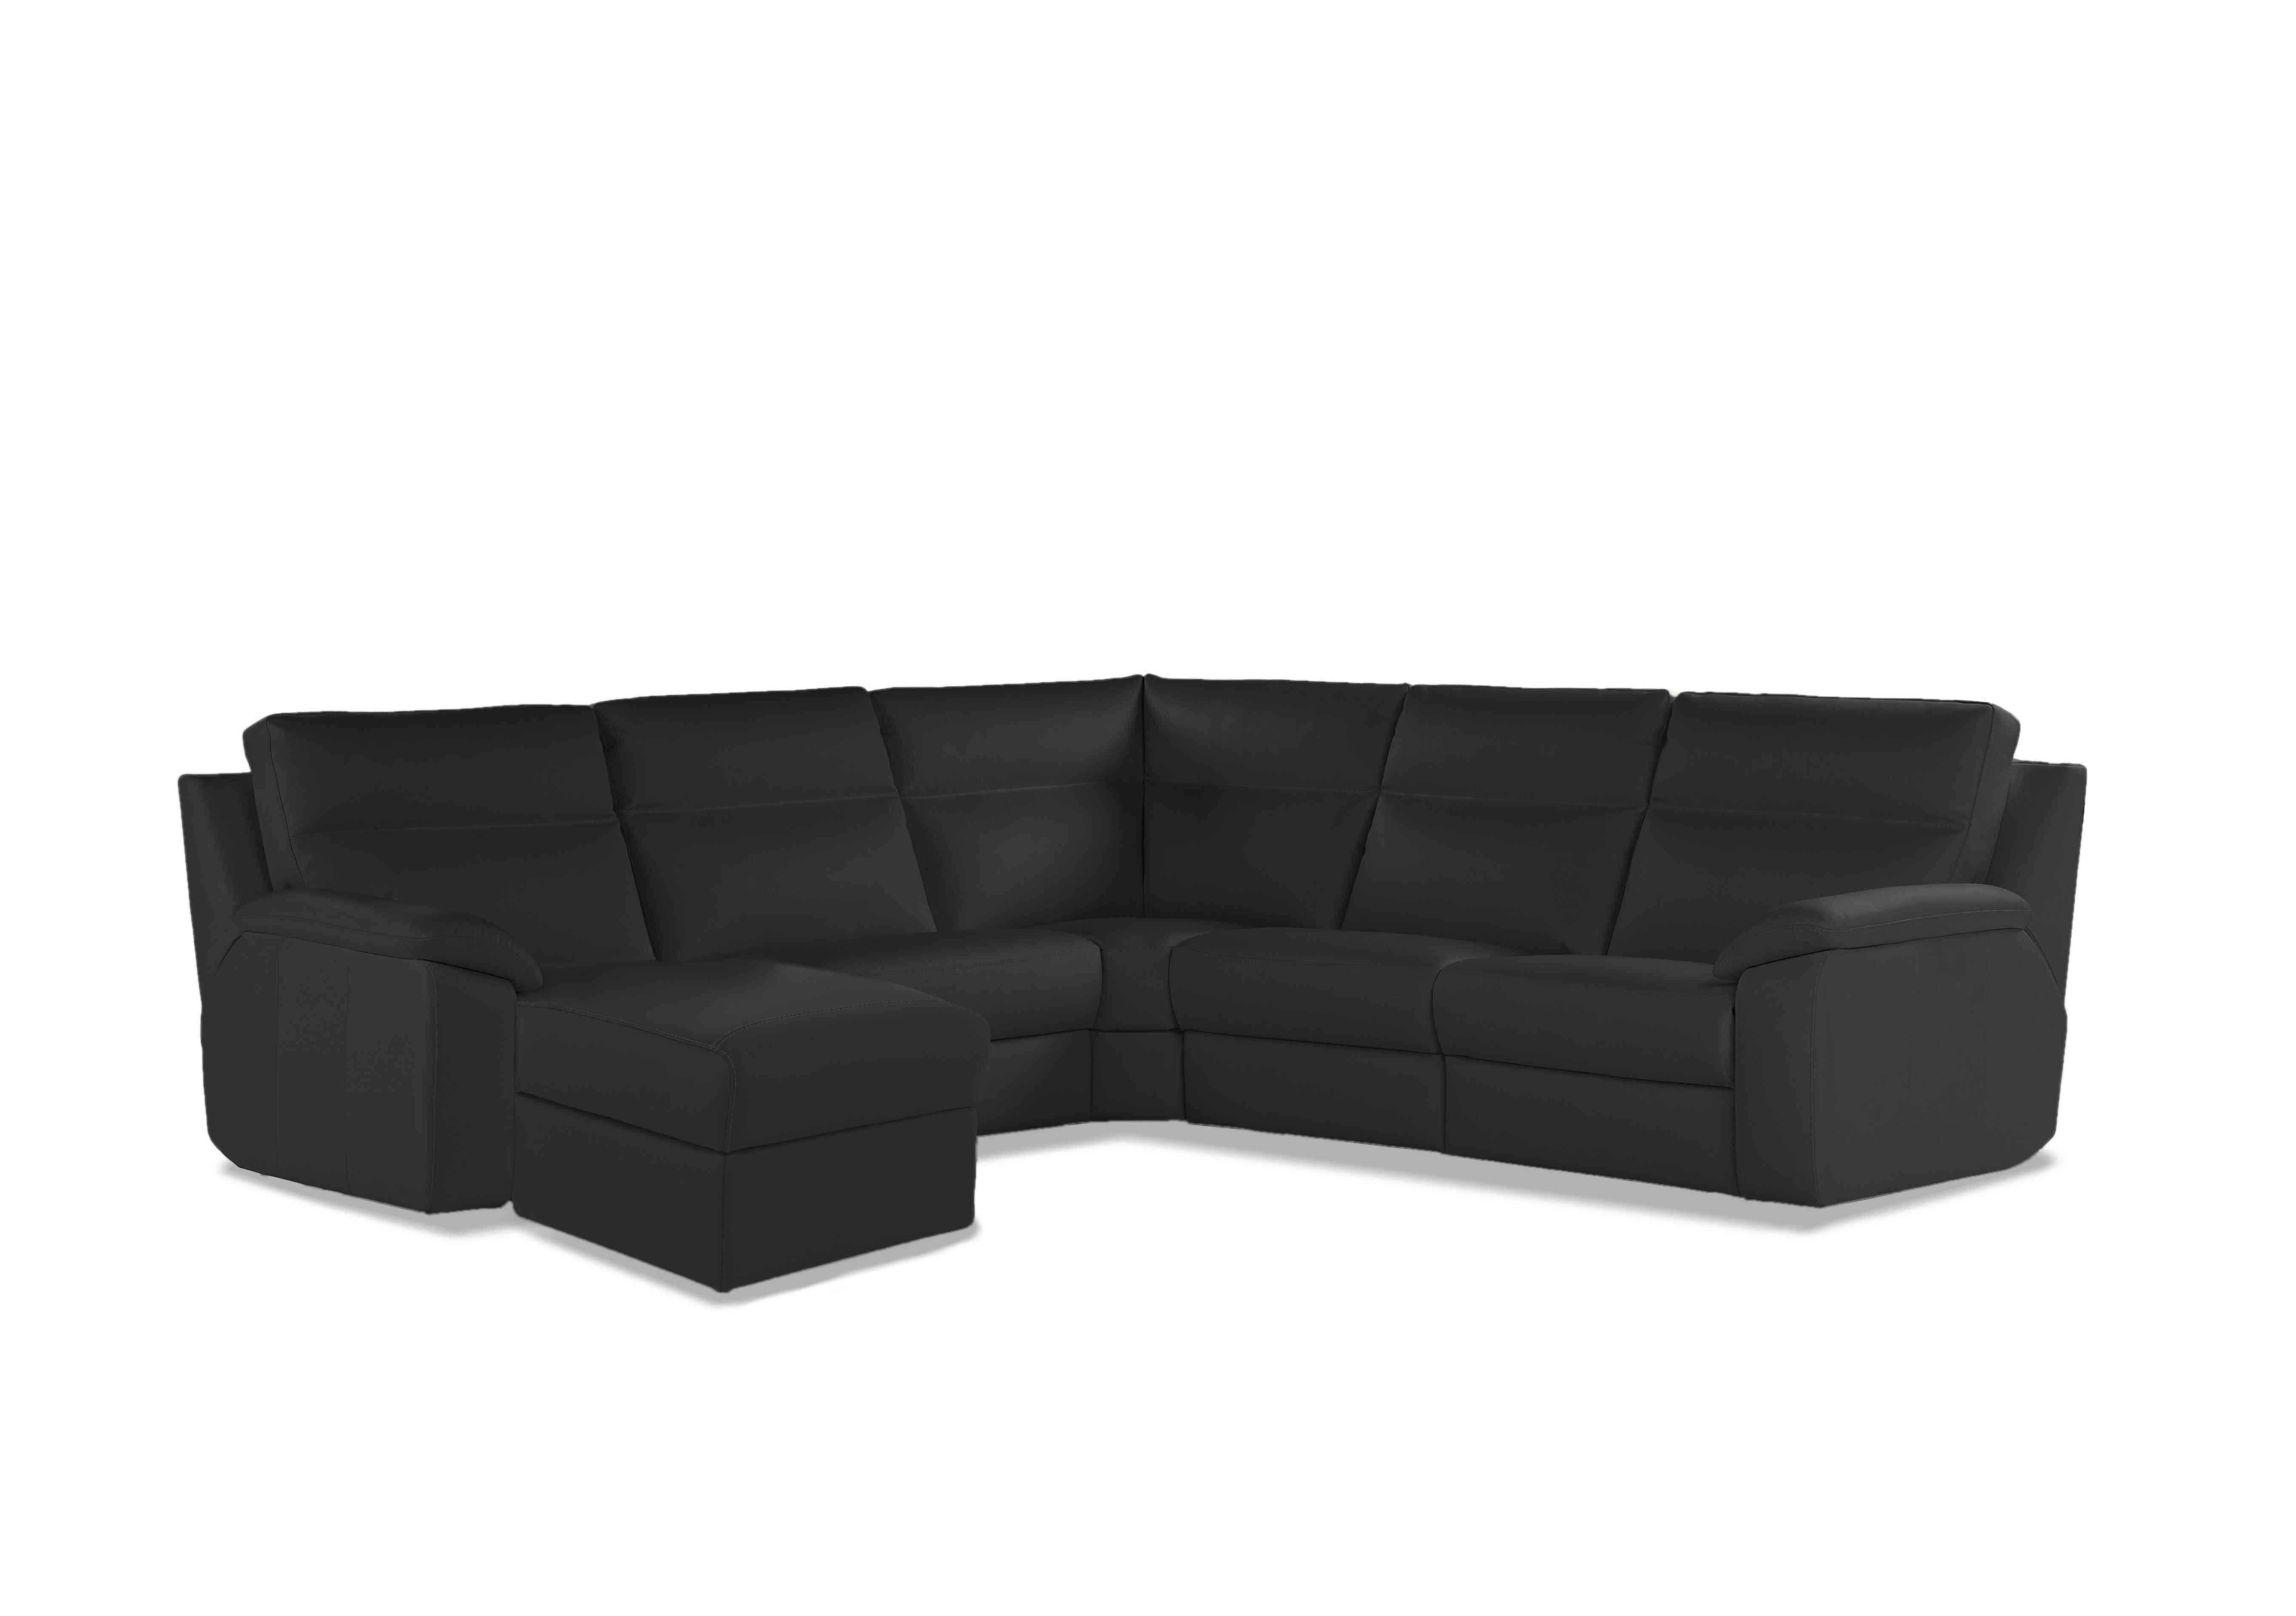 Pepino Large Leather Corner Sofa with Chaise End in 71 Torello Nero on Furniture Village